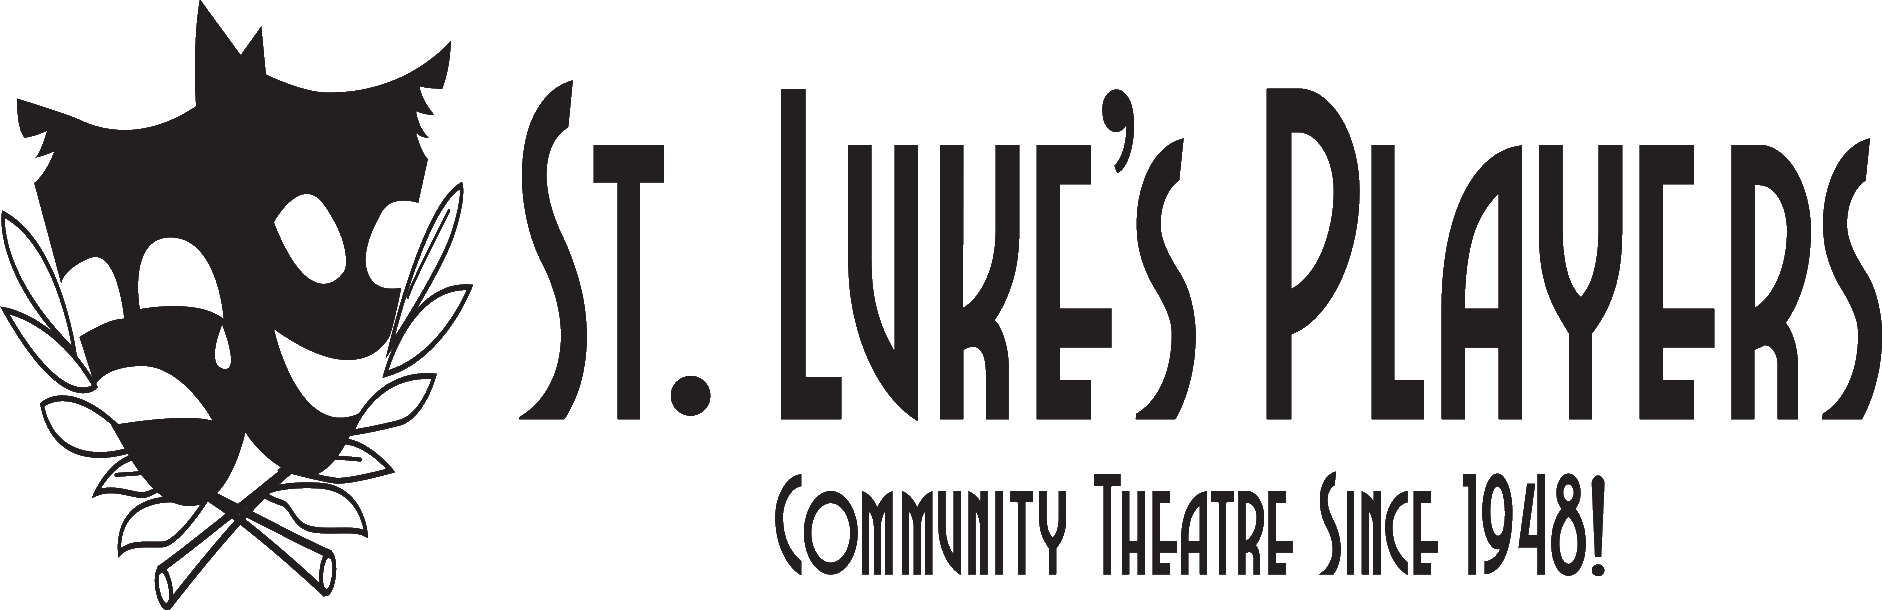 St. Luke Players Community Theatre